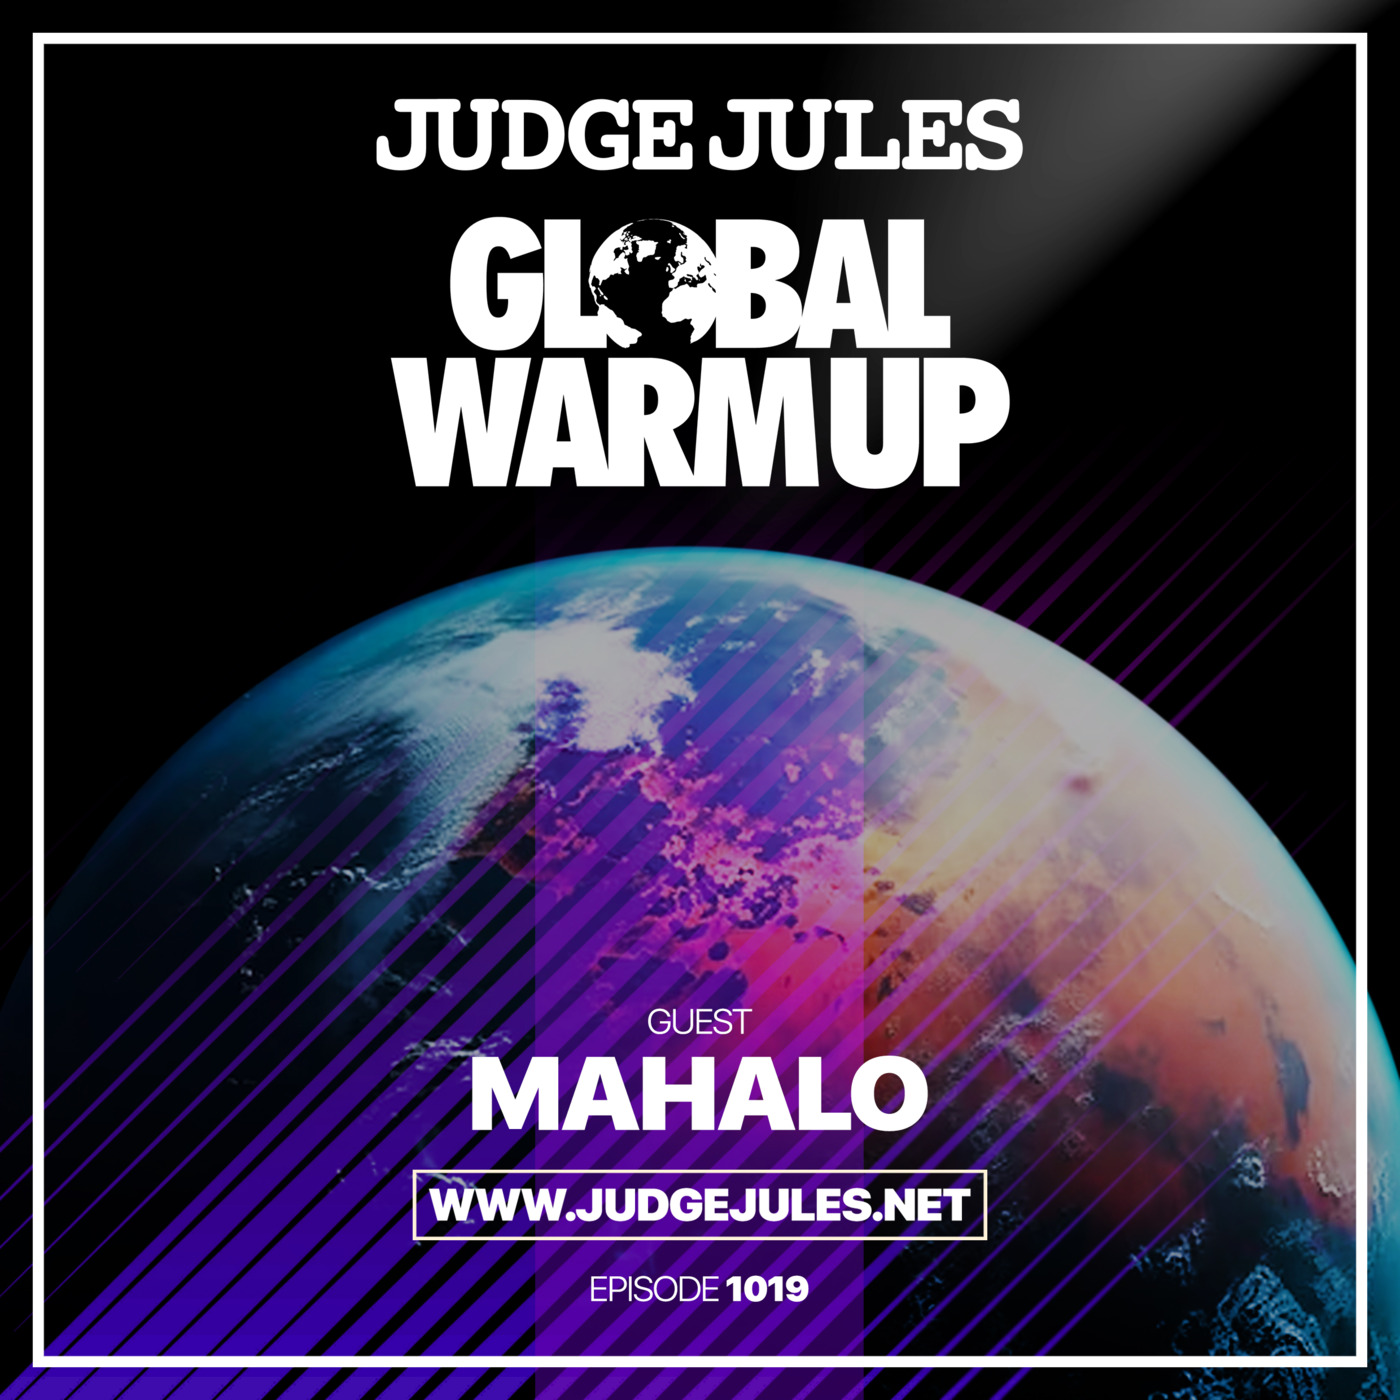 Episode 1019: JUDGE JULES PRESENTS THE GLOBAL WARM UP EPISODE 1019